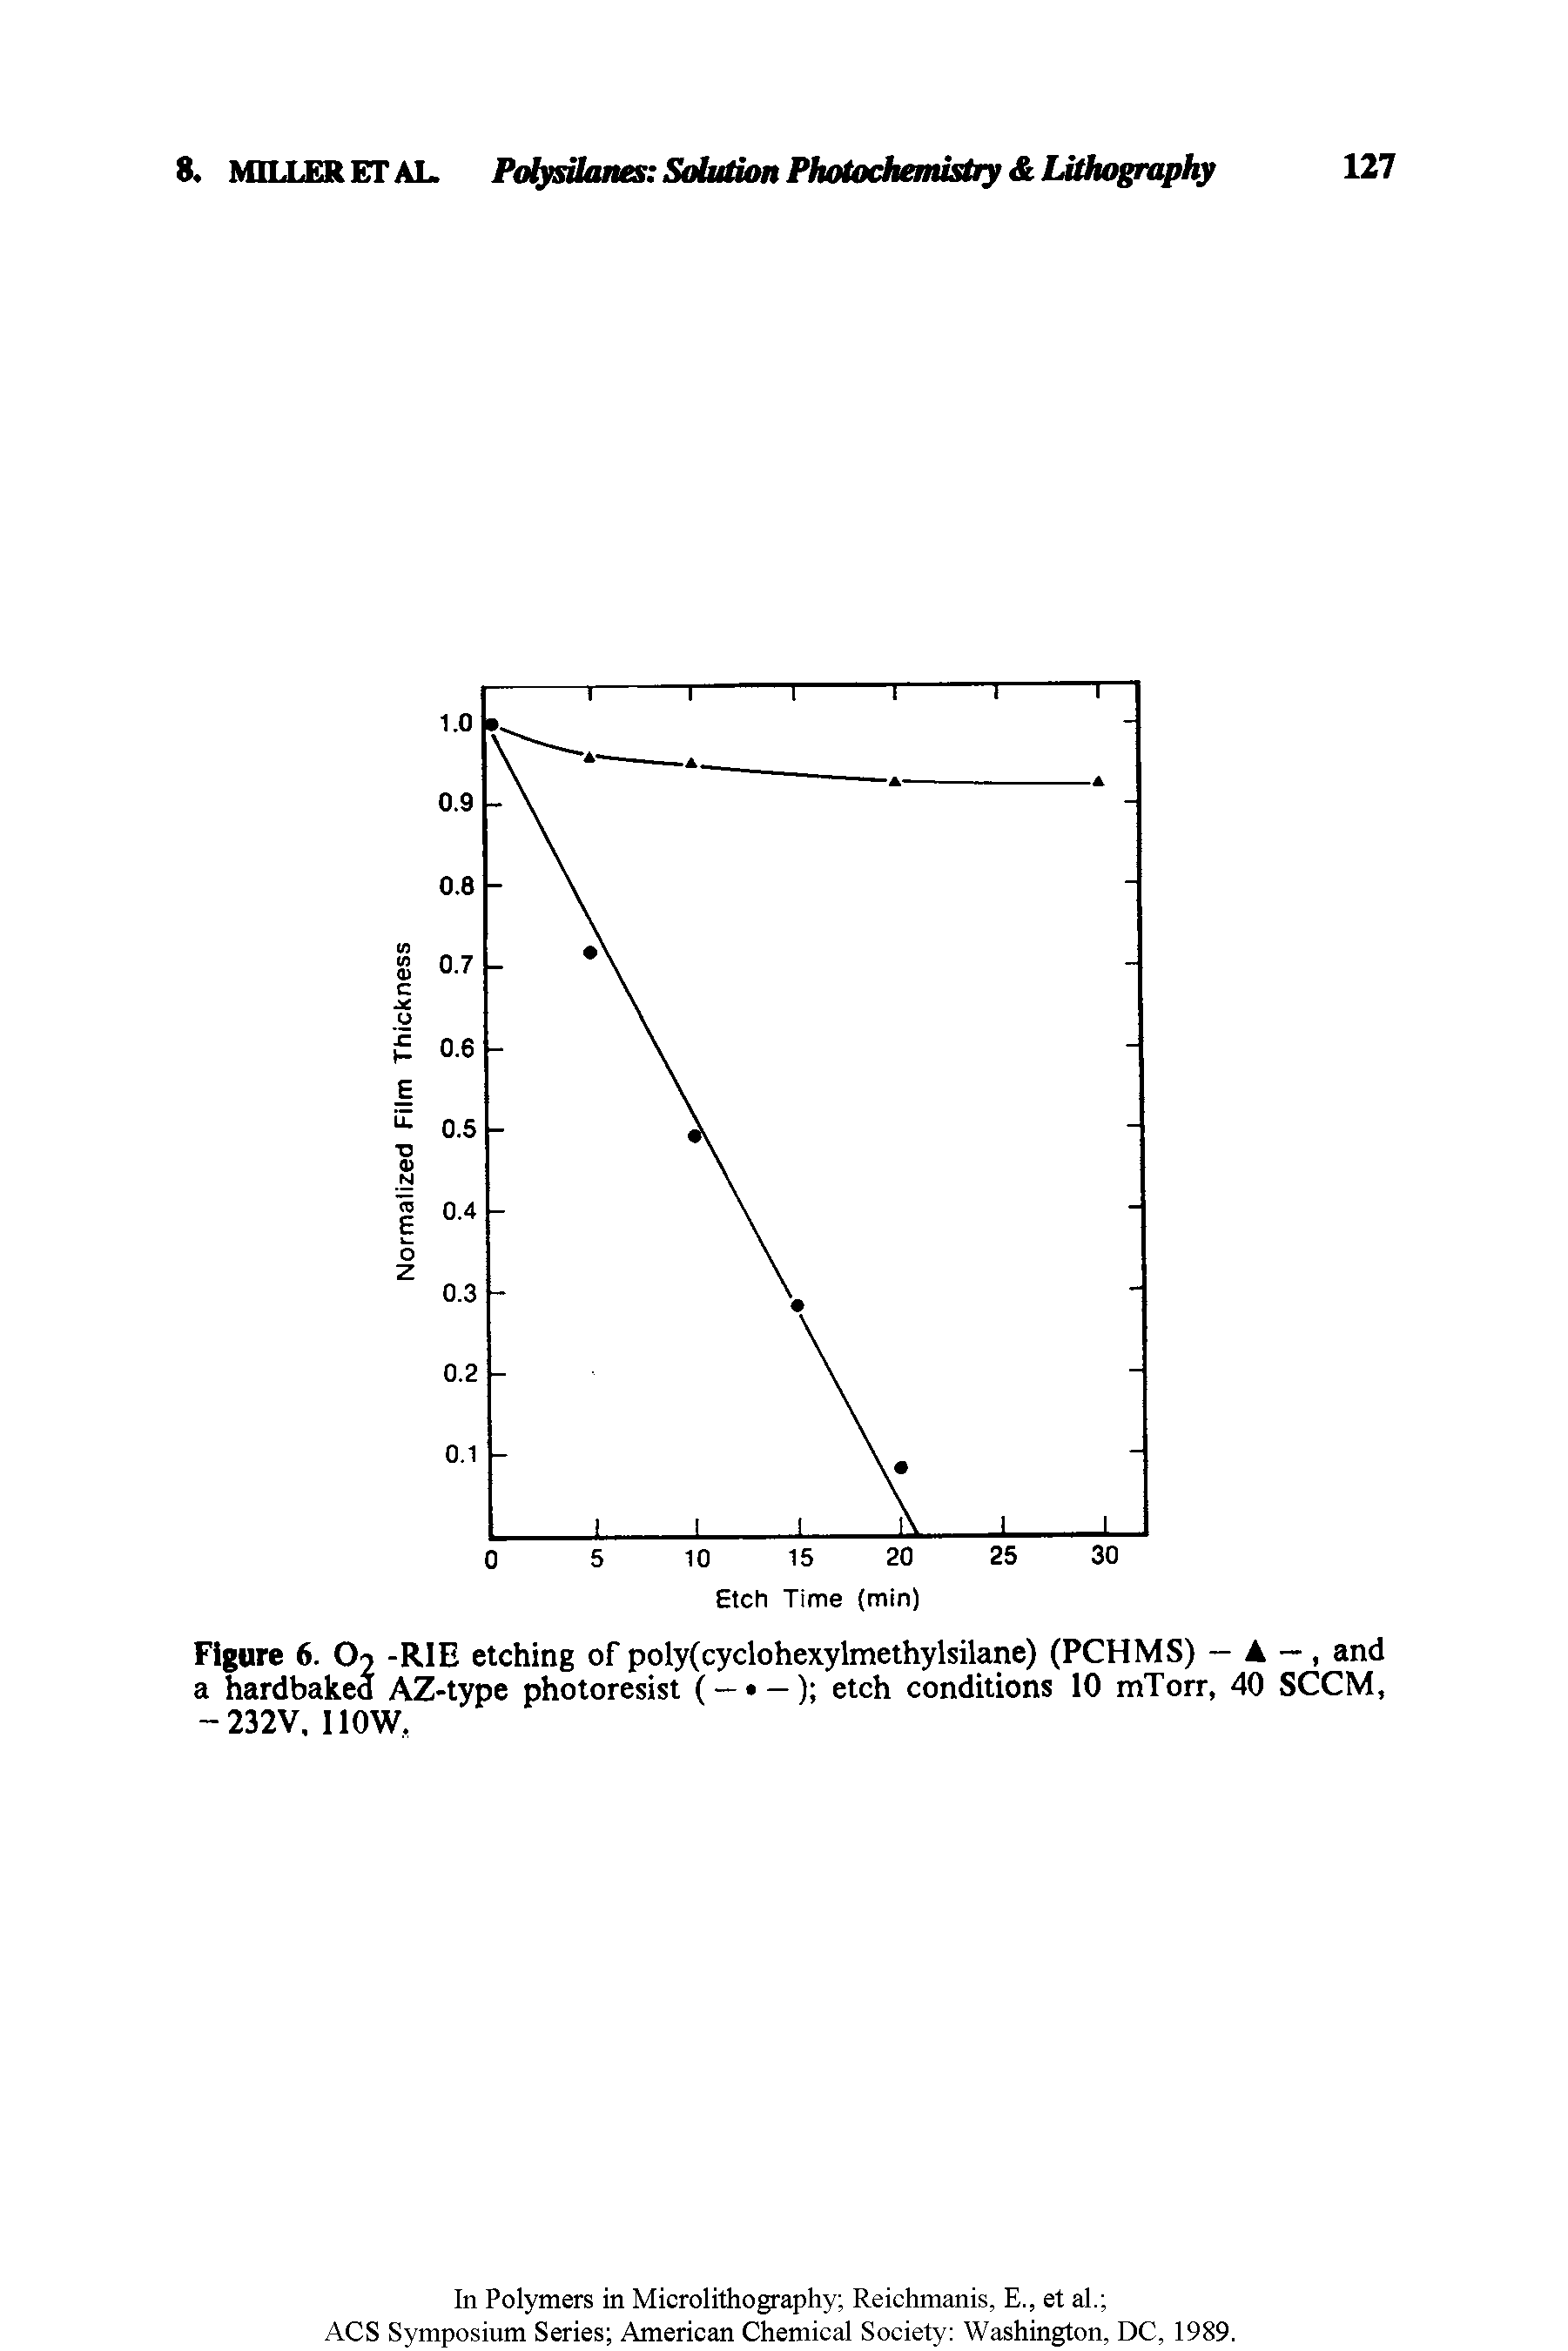 Figure 6. O -RIE etching of poly(cyclohexylmethylsilane) (PCHMS) — A —, and a hardbaked AZ-type photoresist ( — — ) etch conditions 10 mTorr, 40 SCCM, -232V, 110W,...